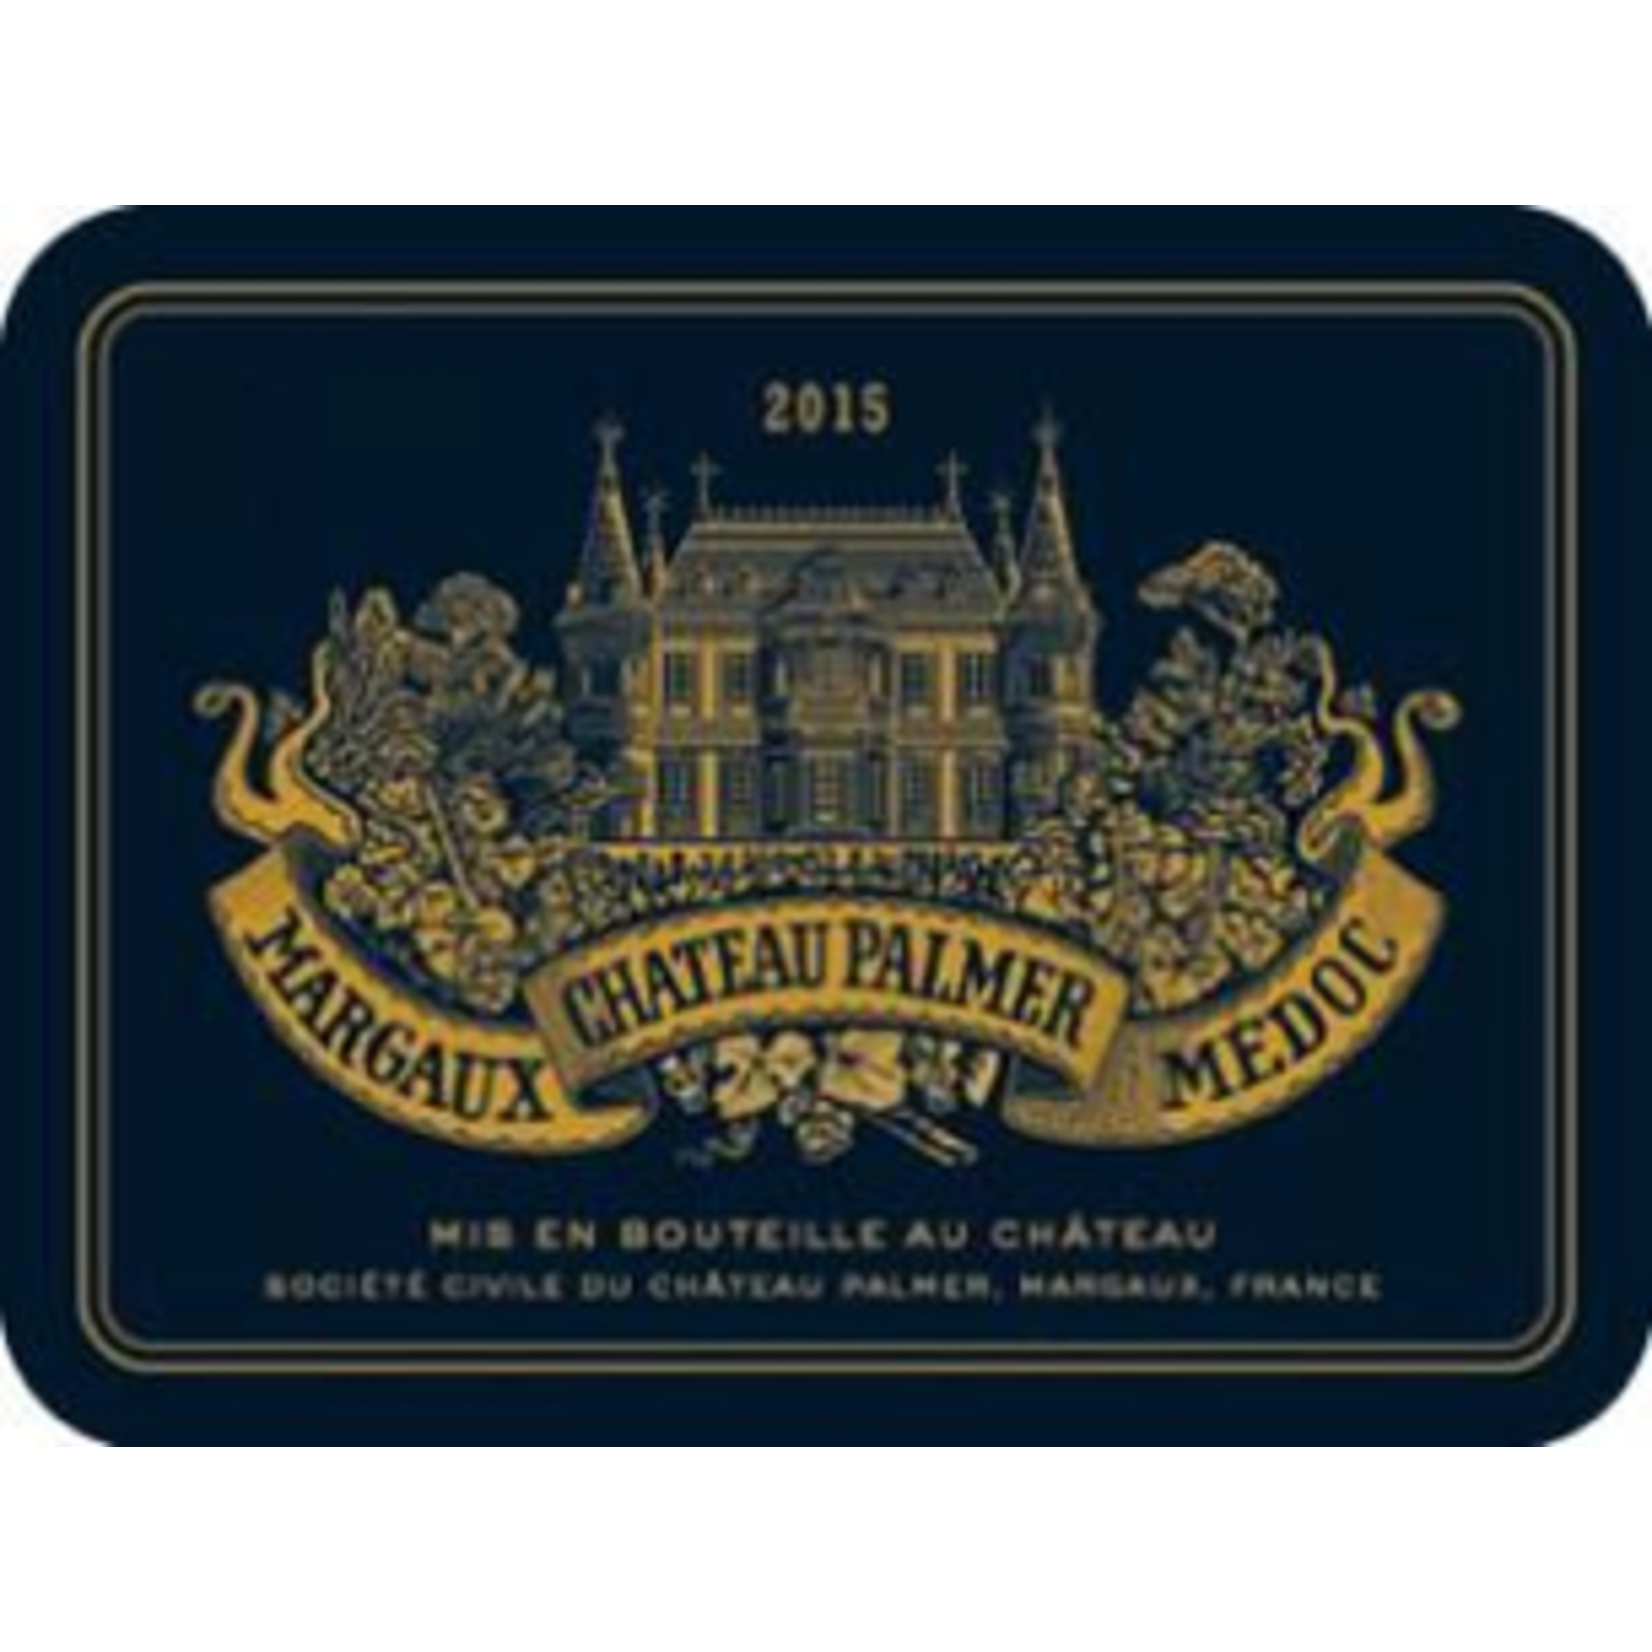 Wine Chateau Palmer 2015